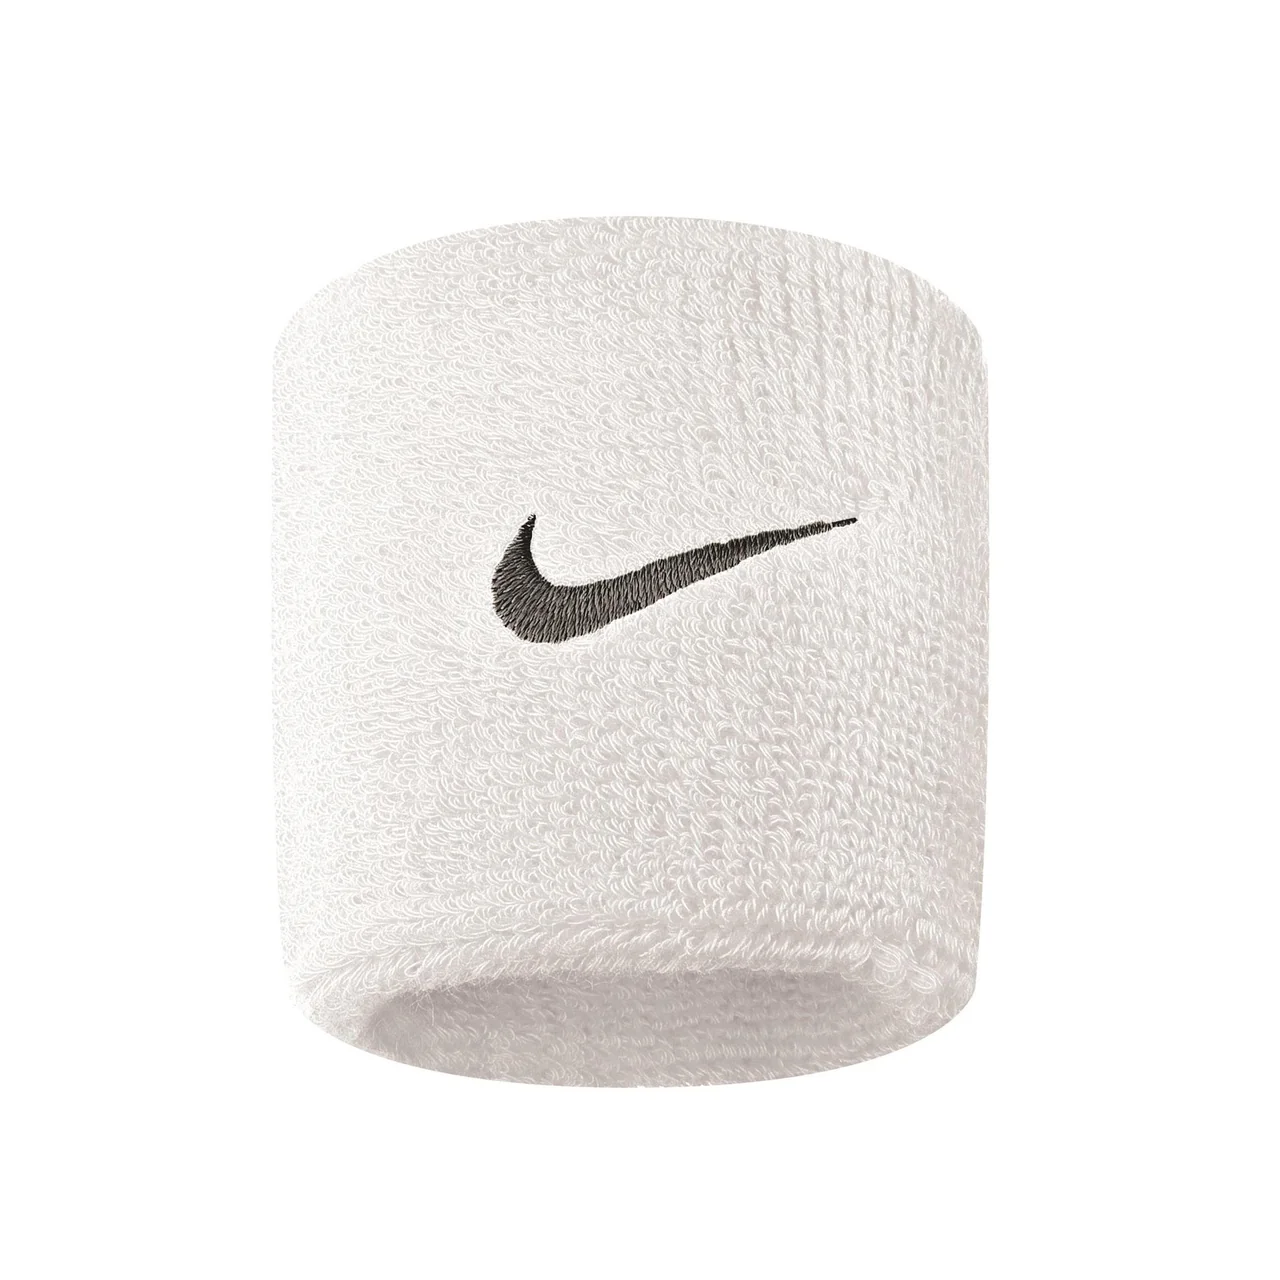 Nike Wristband Swoosh White